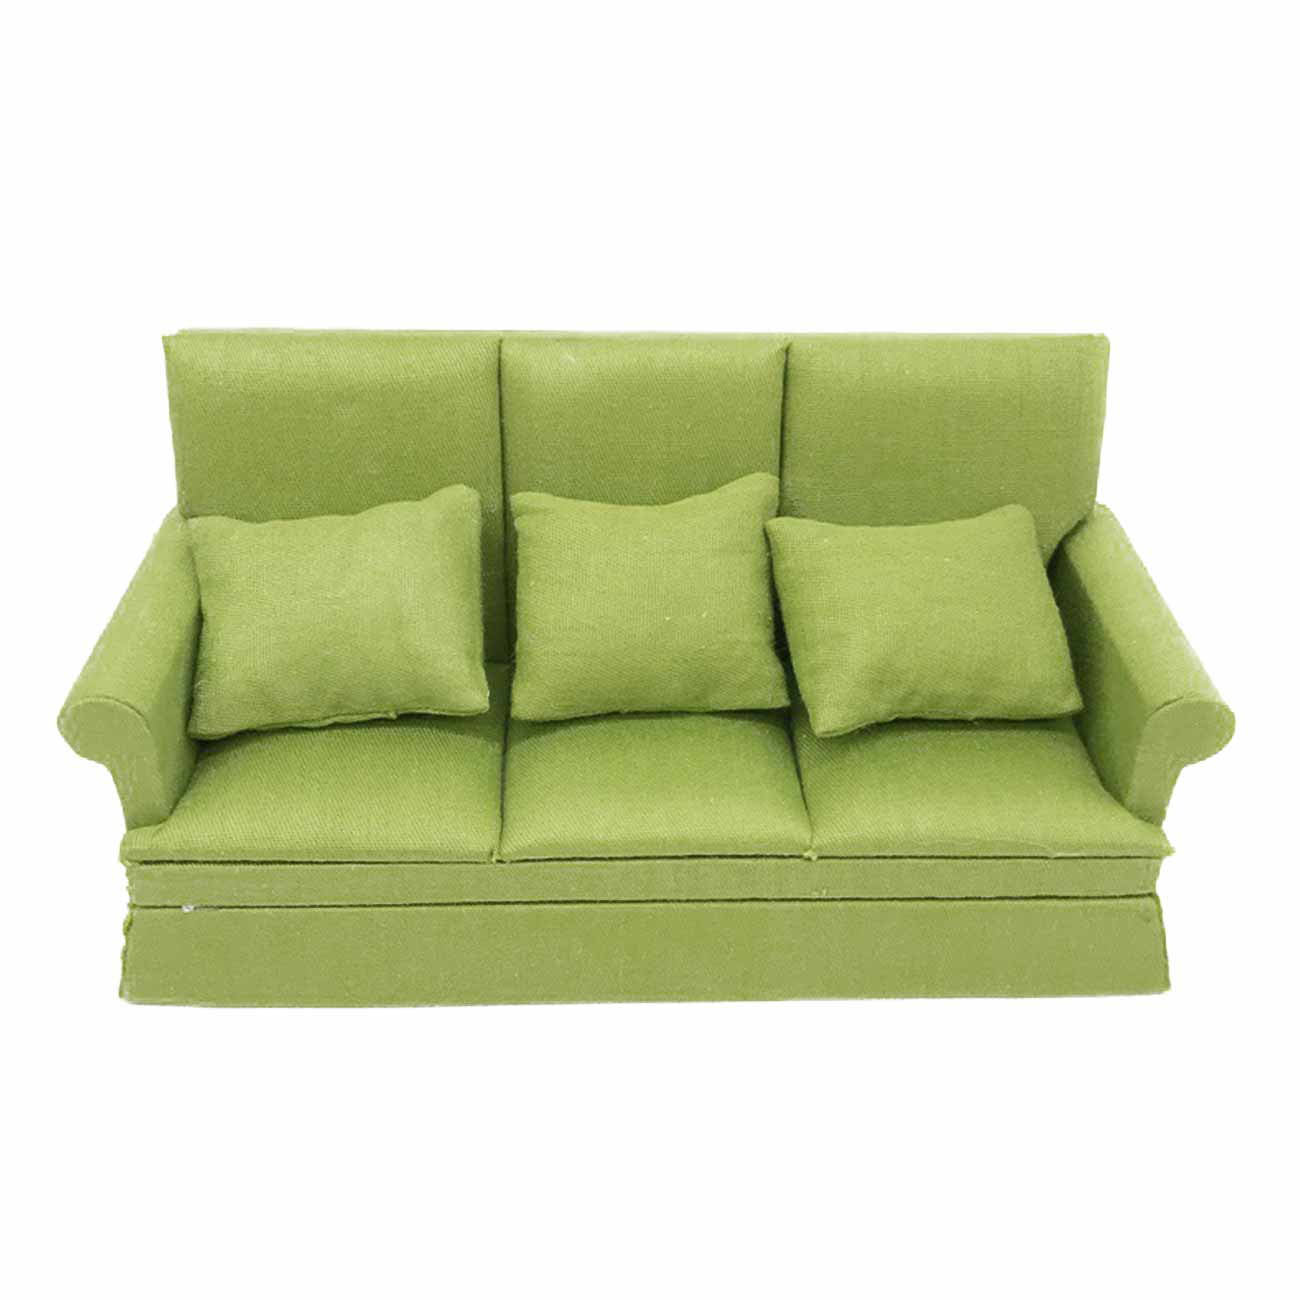 1:12 Dollhouse Miniature Living Room Furniture Wood Single Sofa Chair Green 